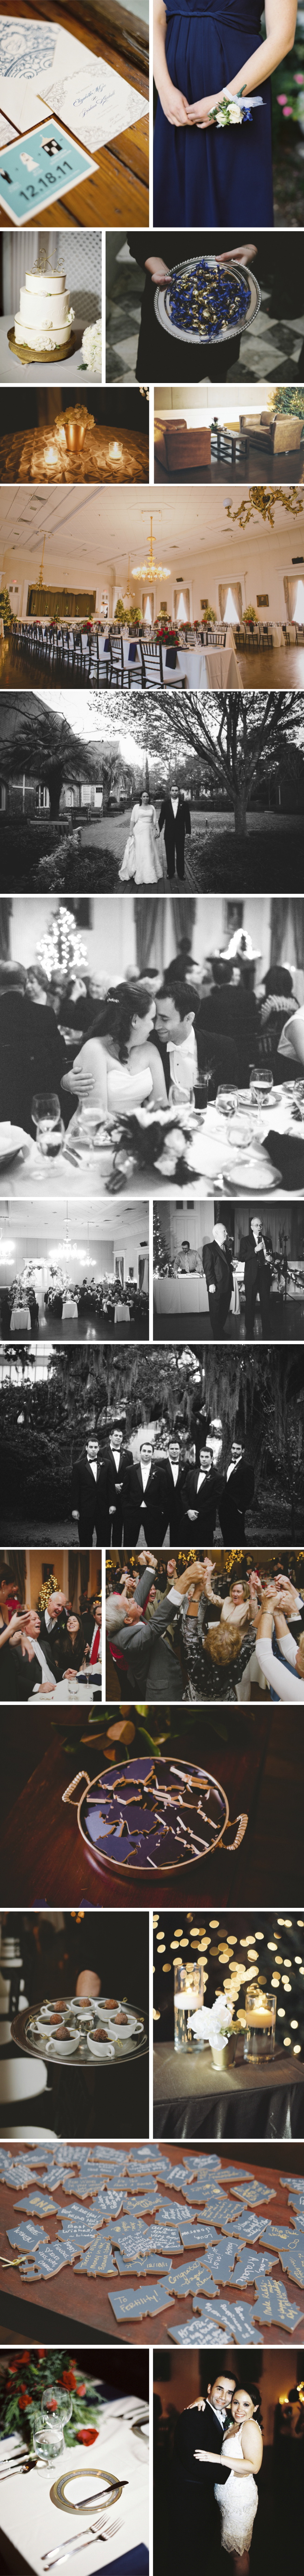 wedding blogs | Charleston weddings